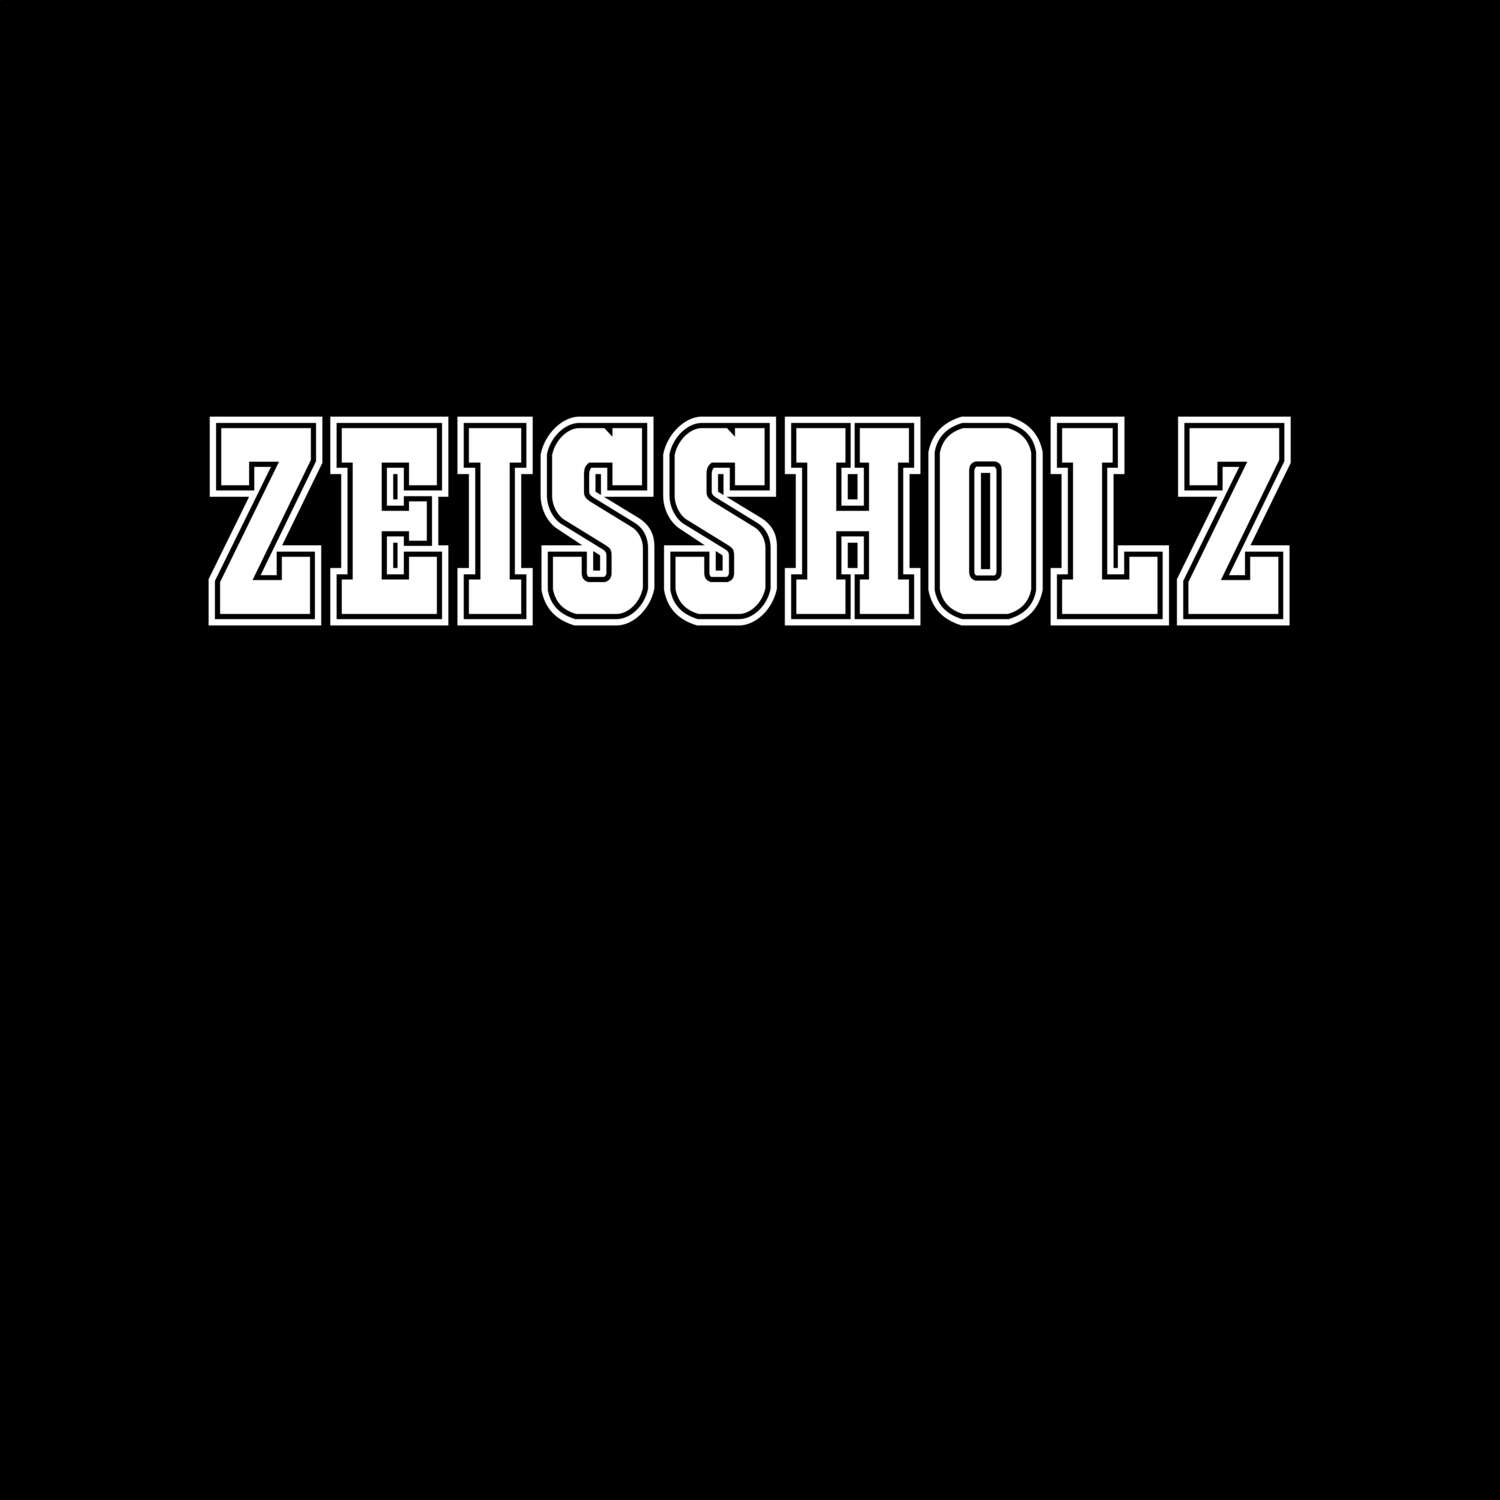 Zeißholz T-Shirt »Classic«